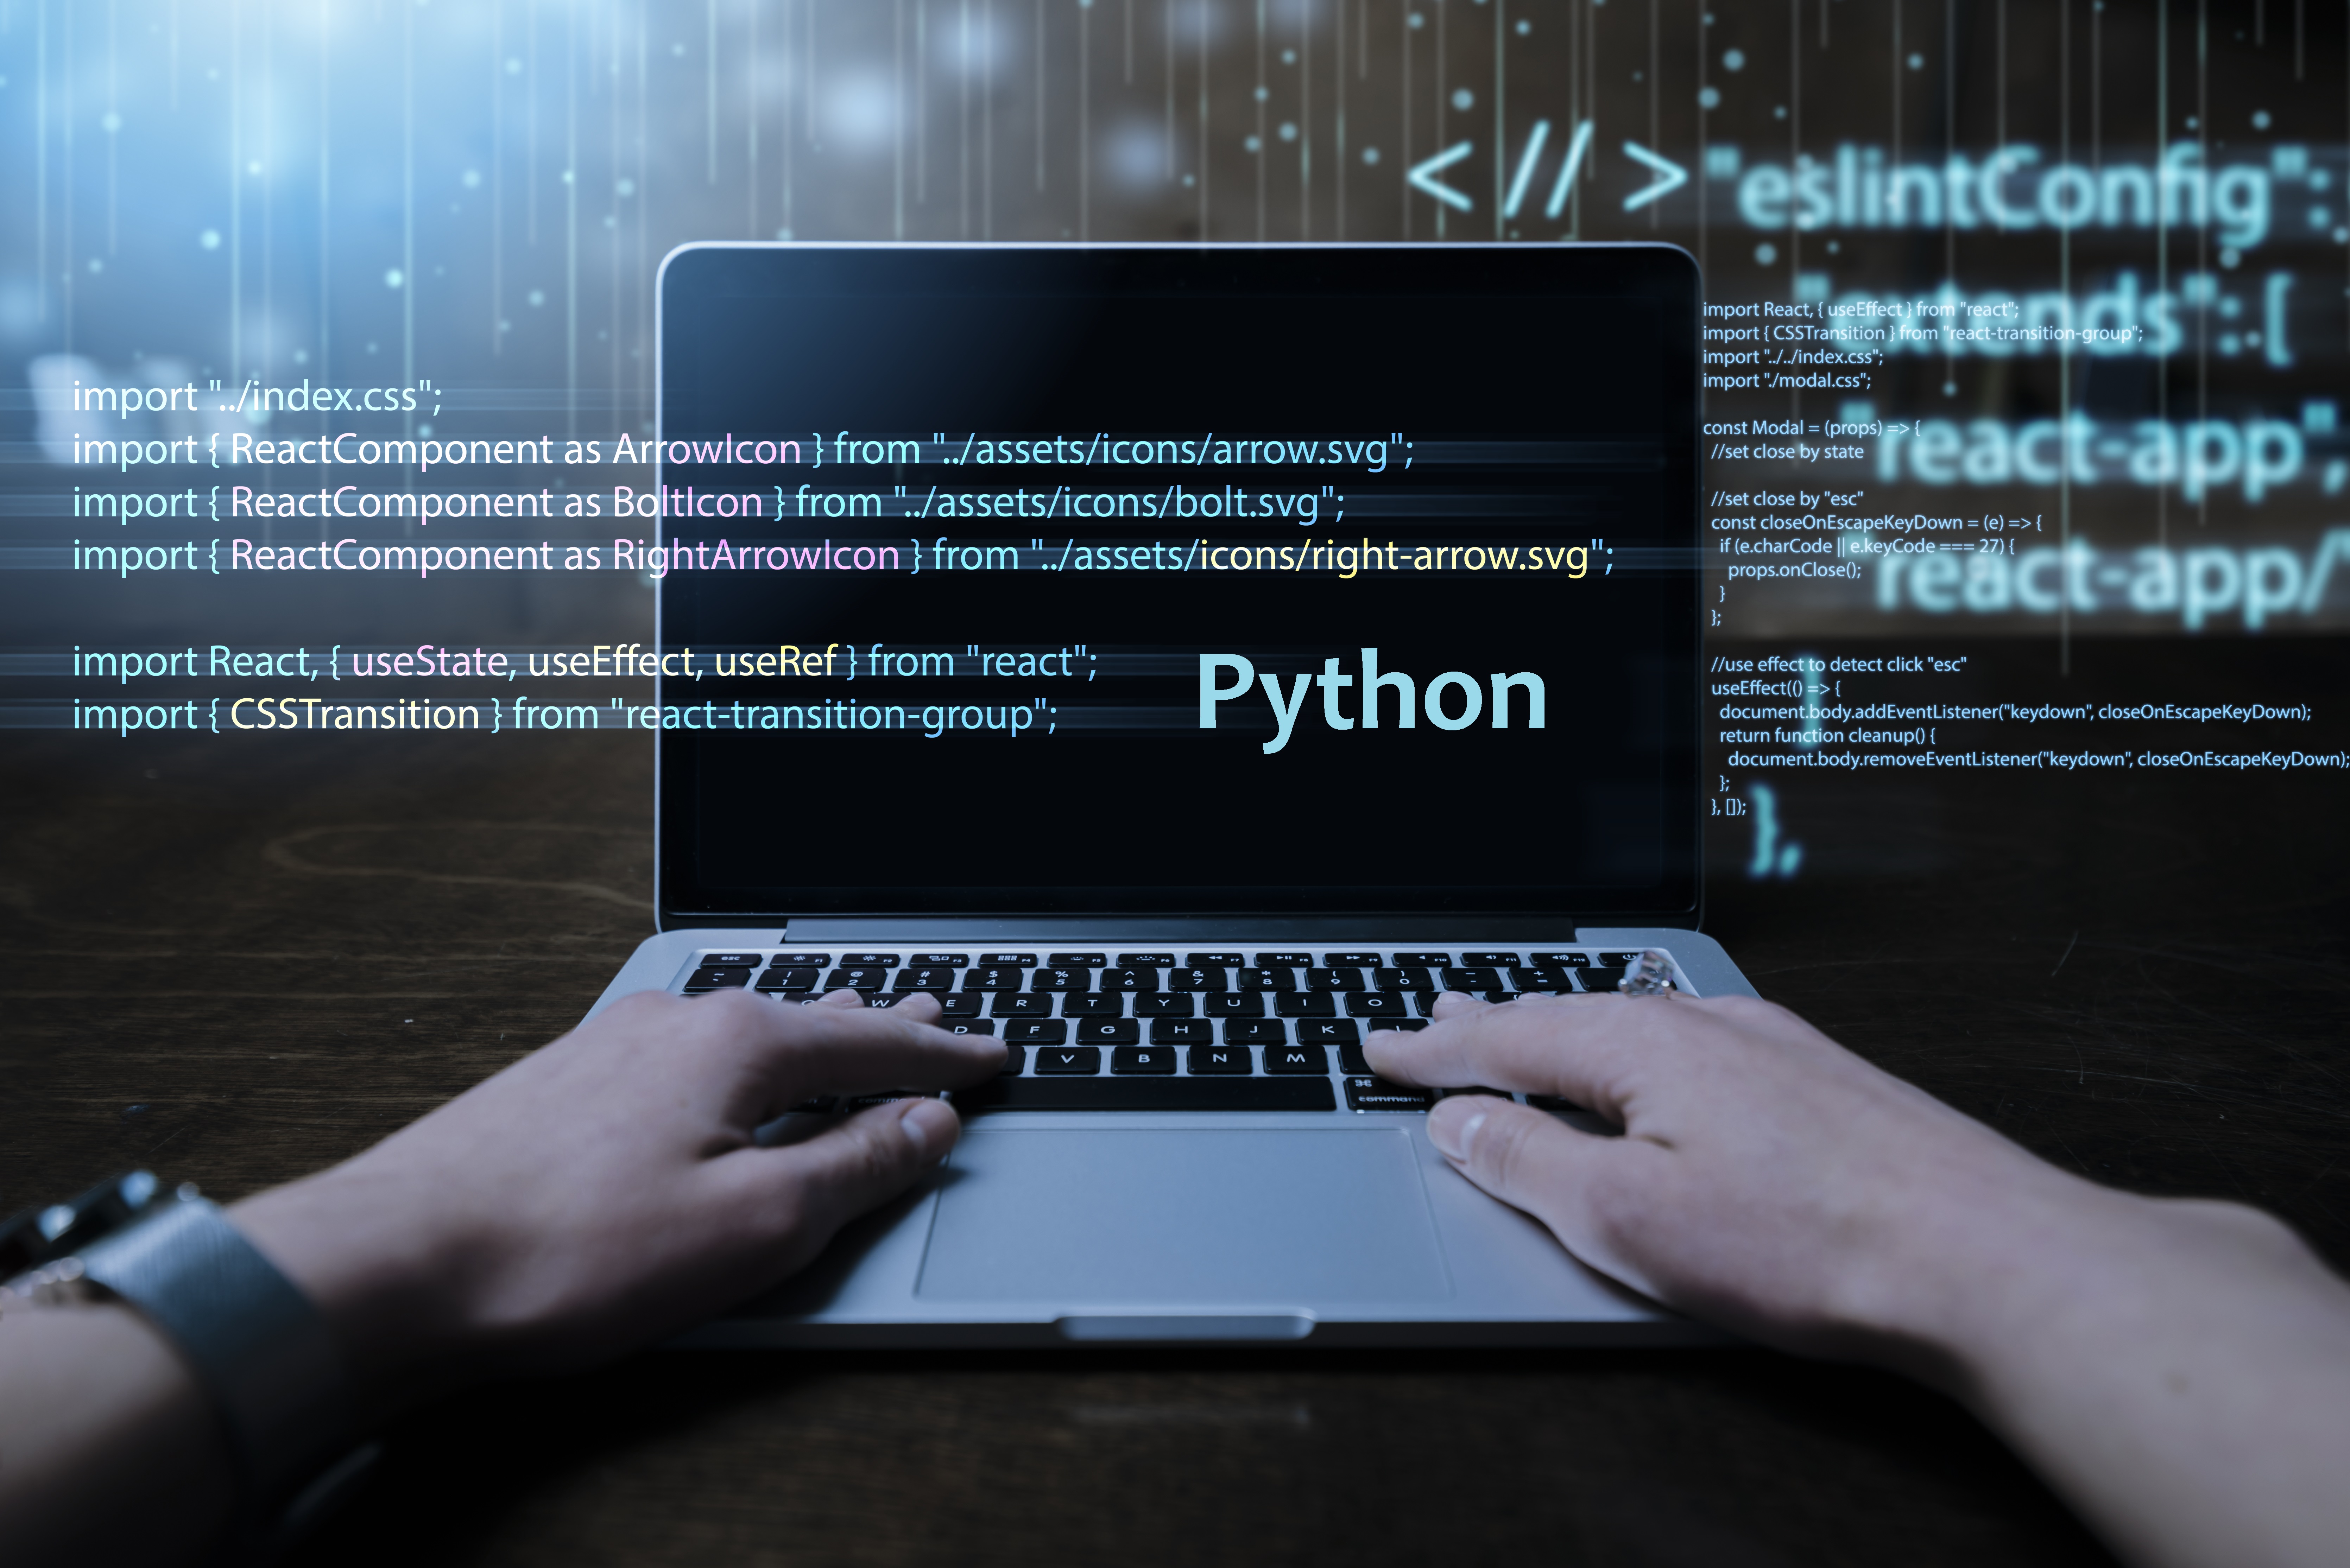 Python Training in Noida